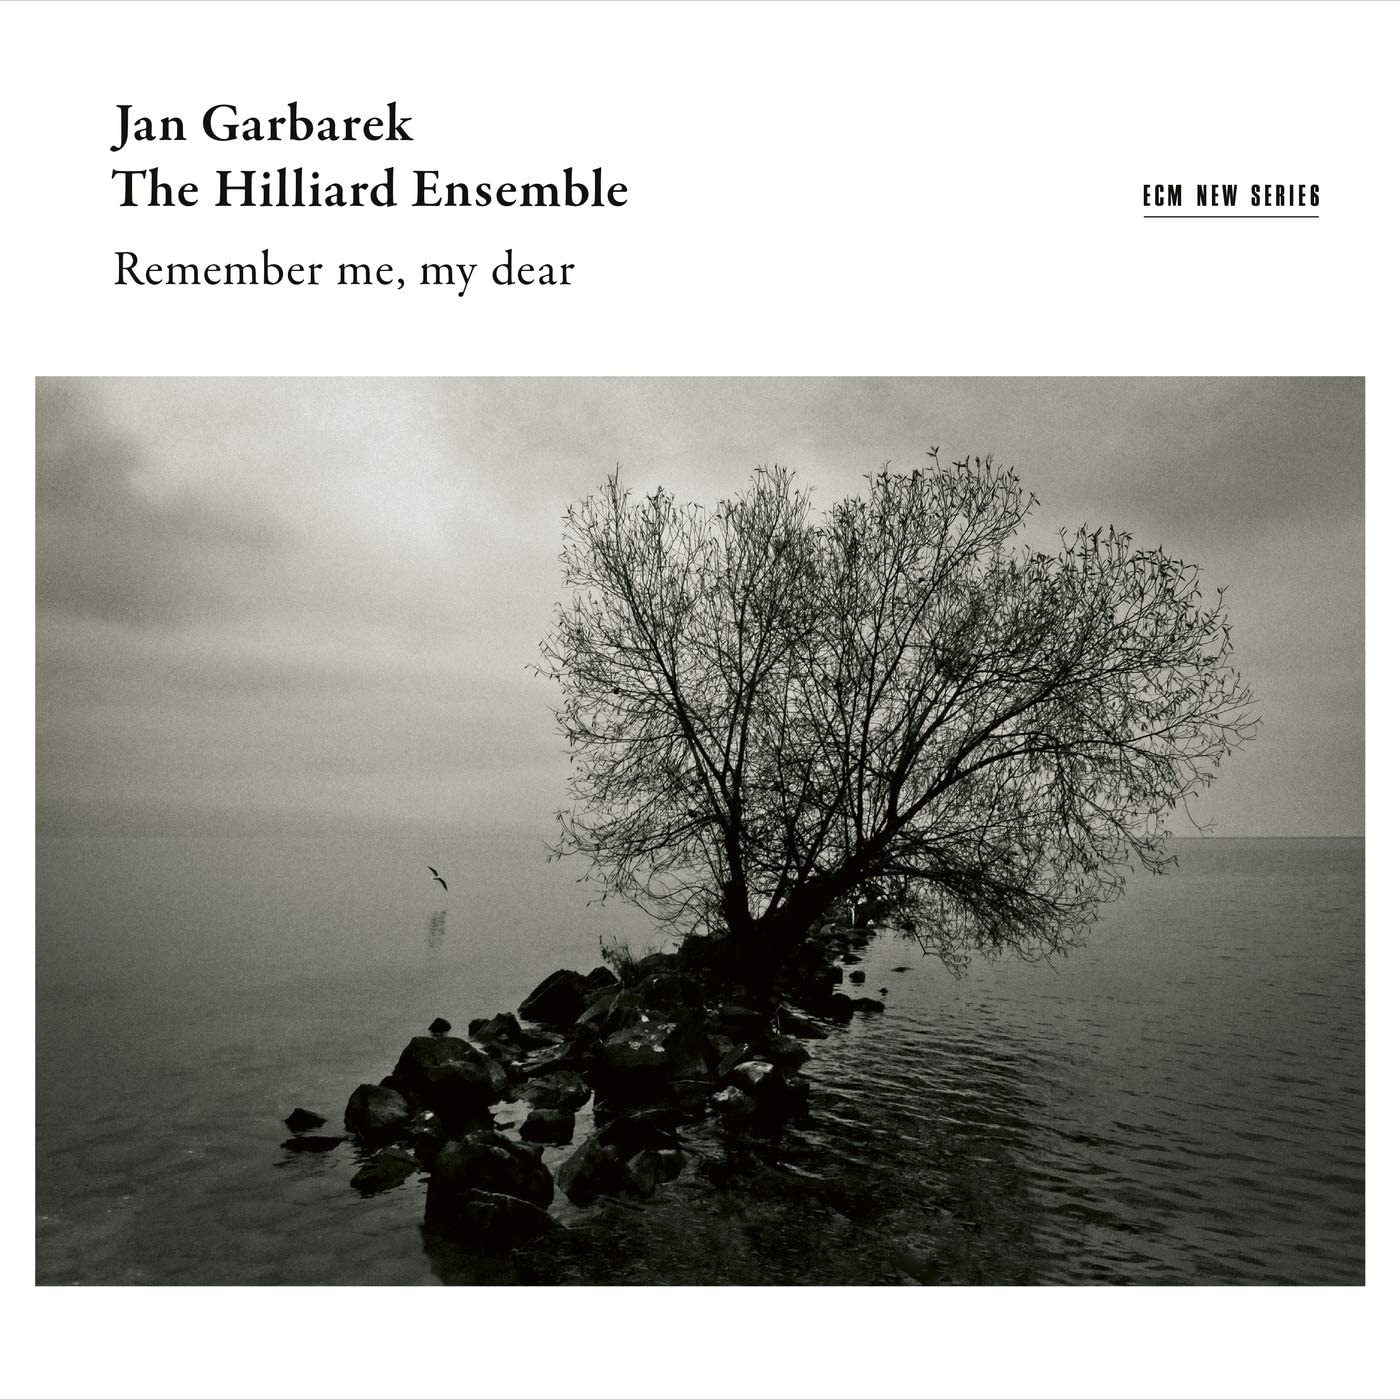 Cover of Garbarek Hilliard CD